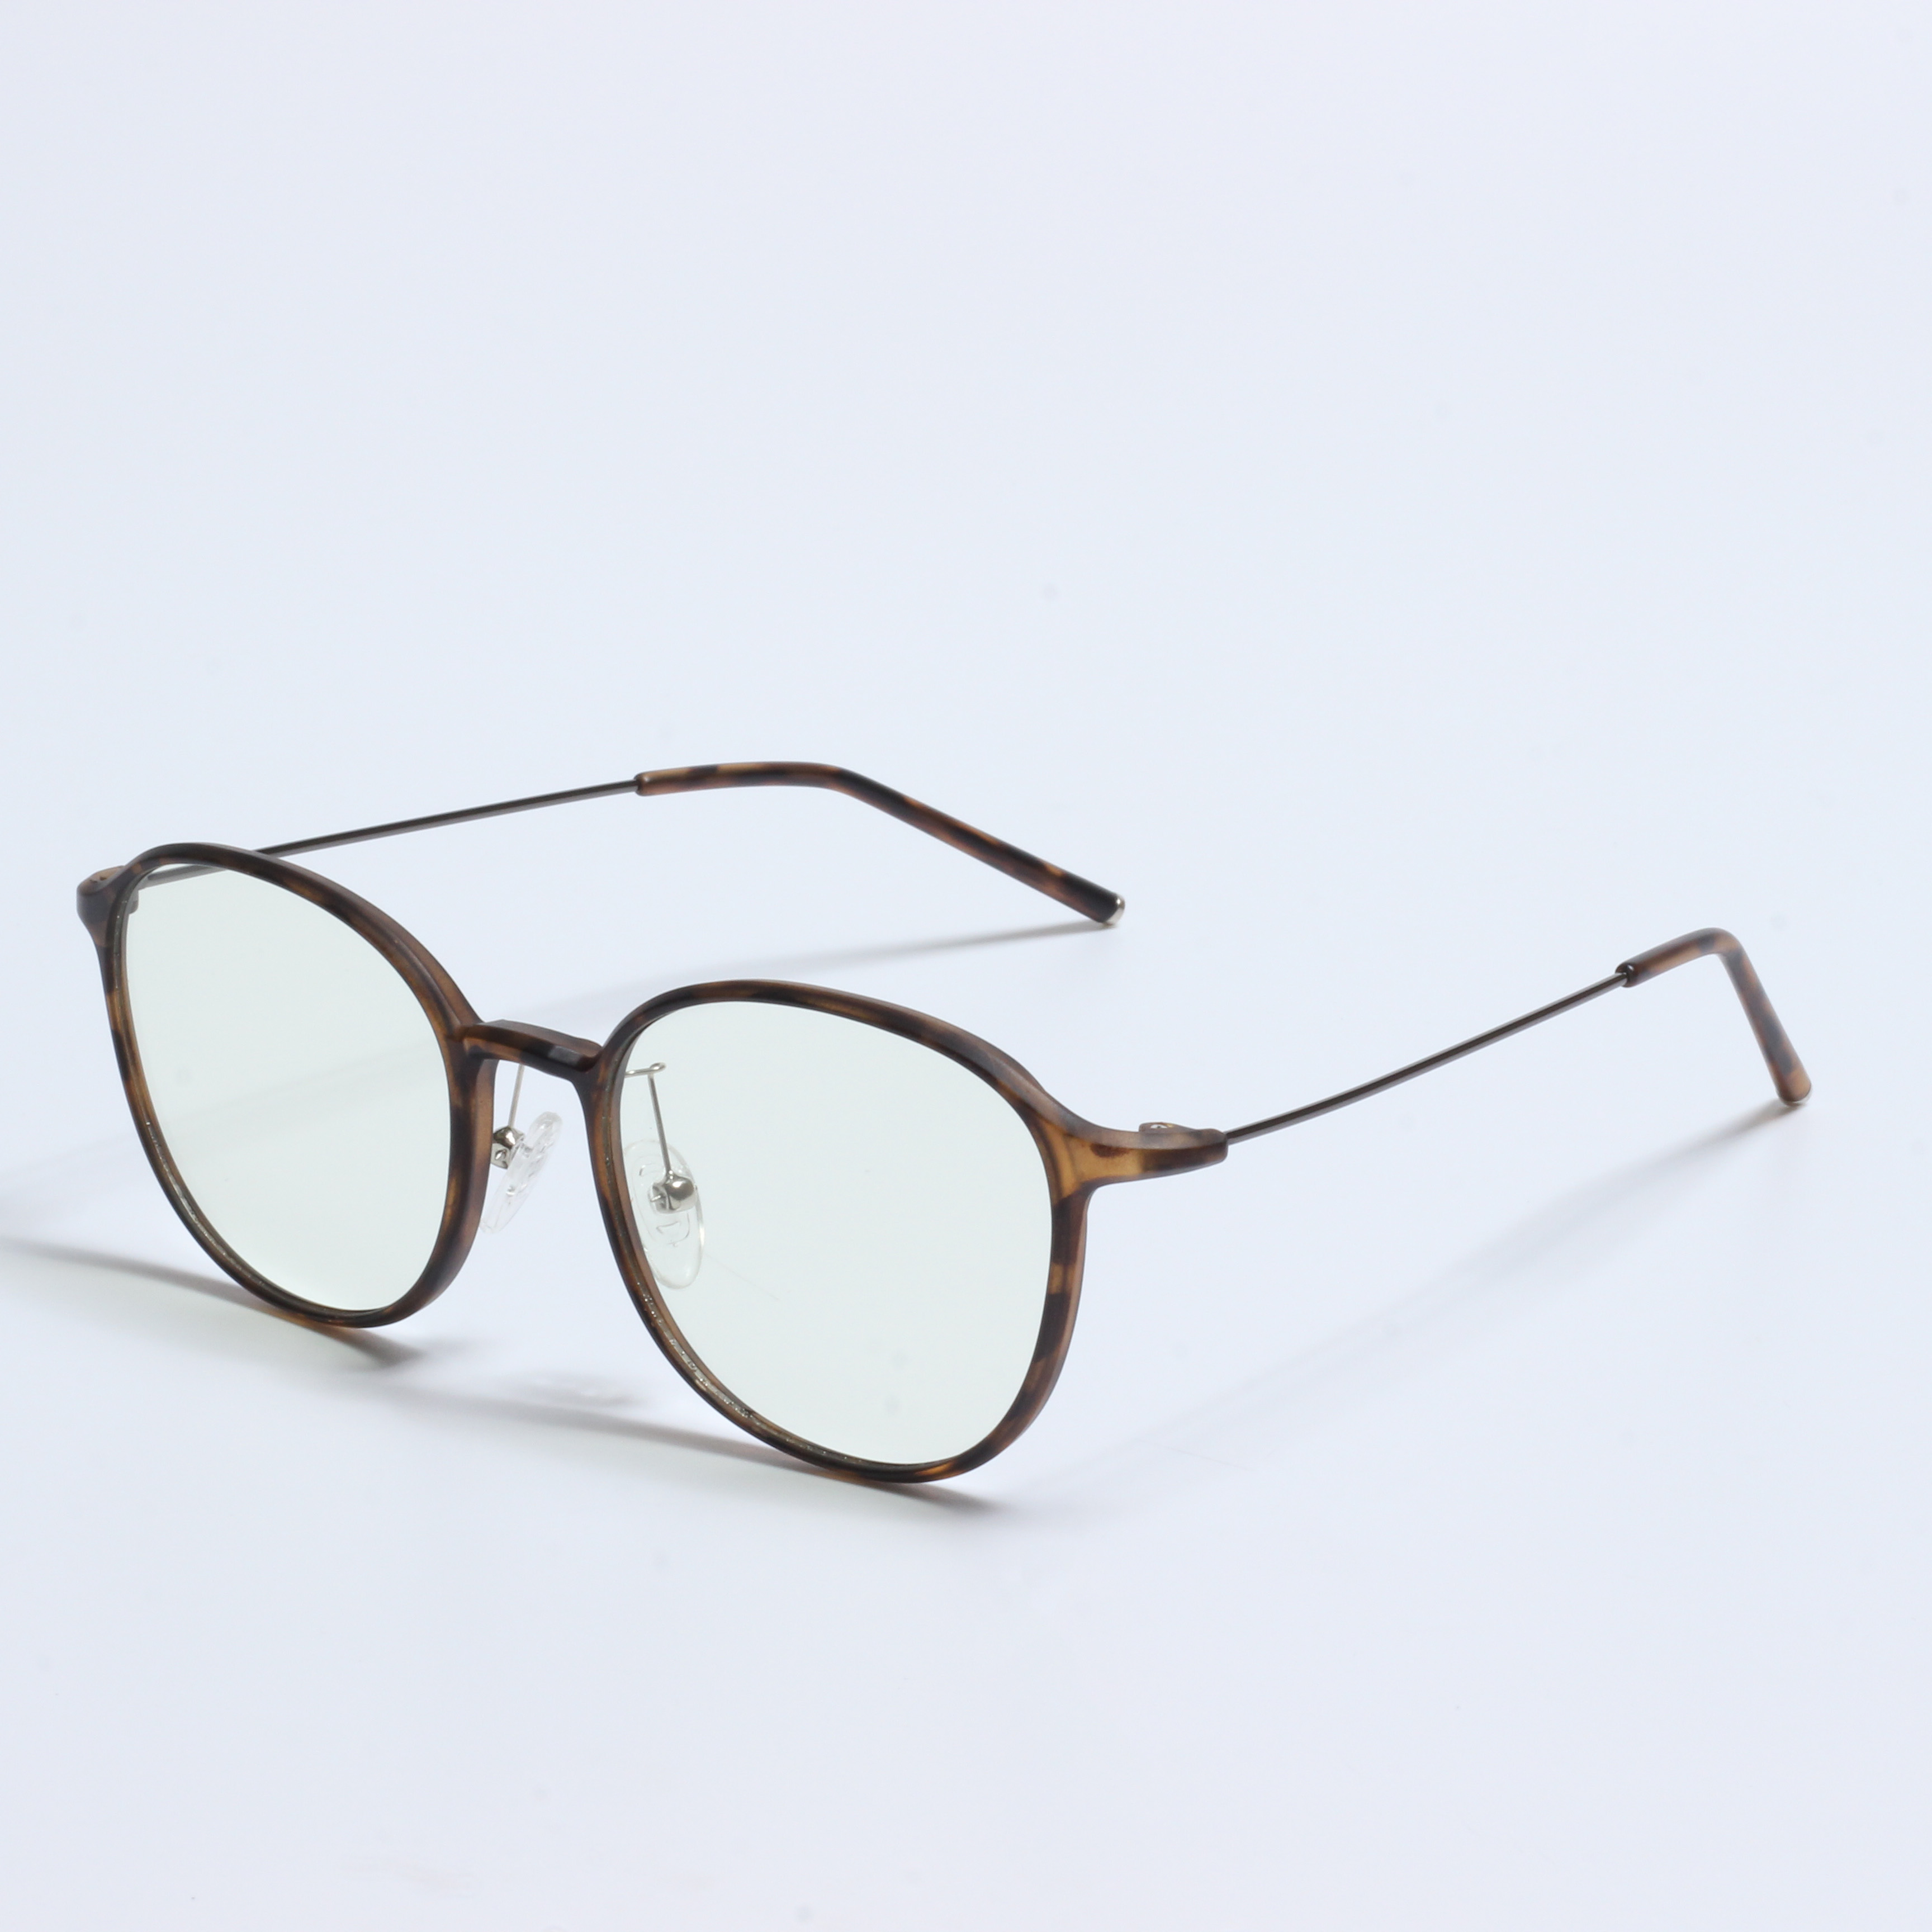 Veleprodaja optičkih naočala Tr90 (8)